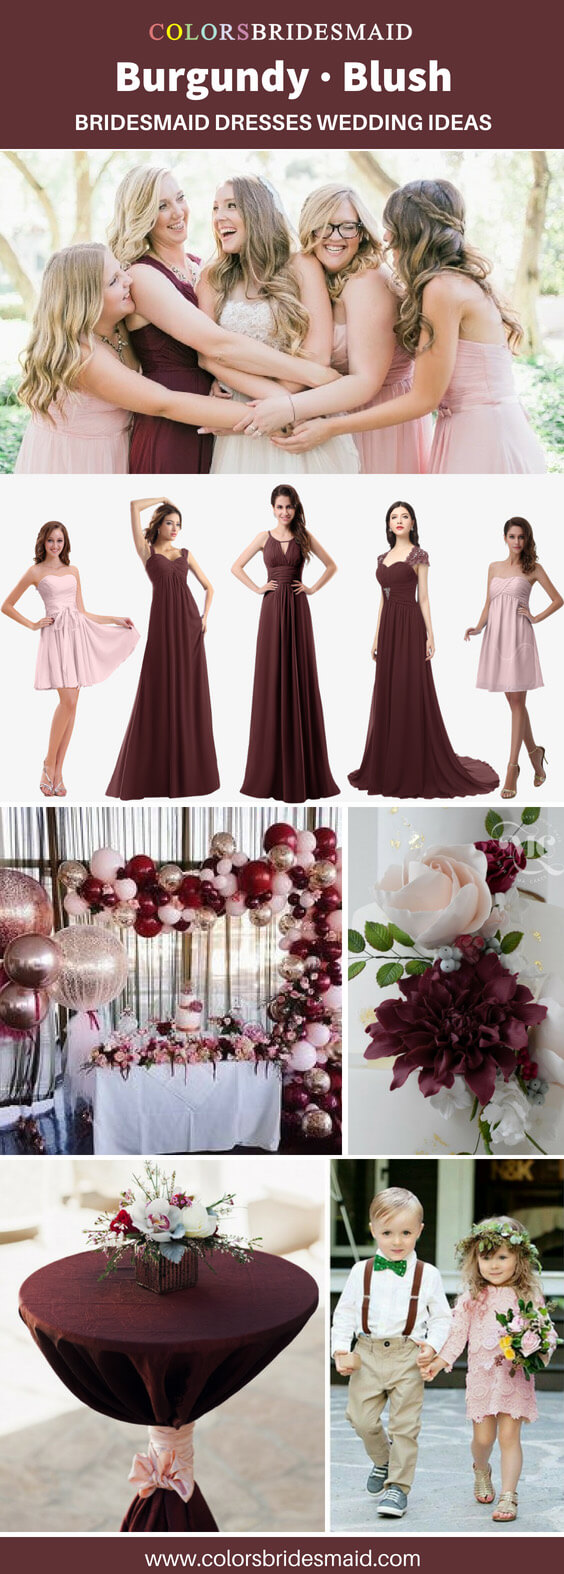 burgundy and pink bridesmaid dresses